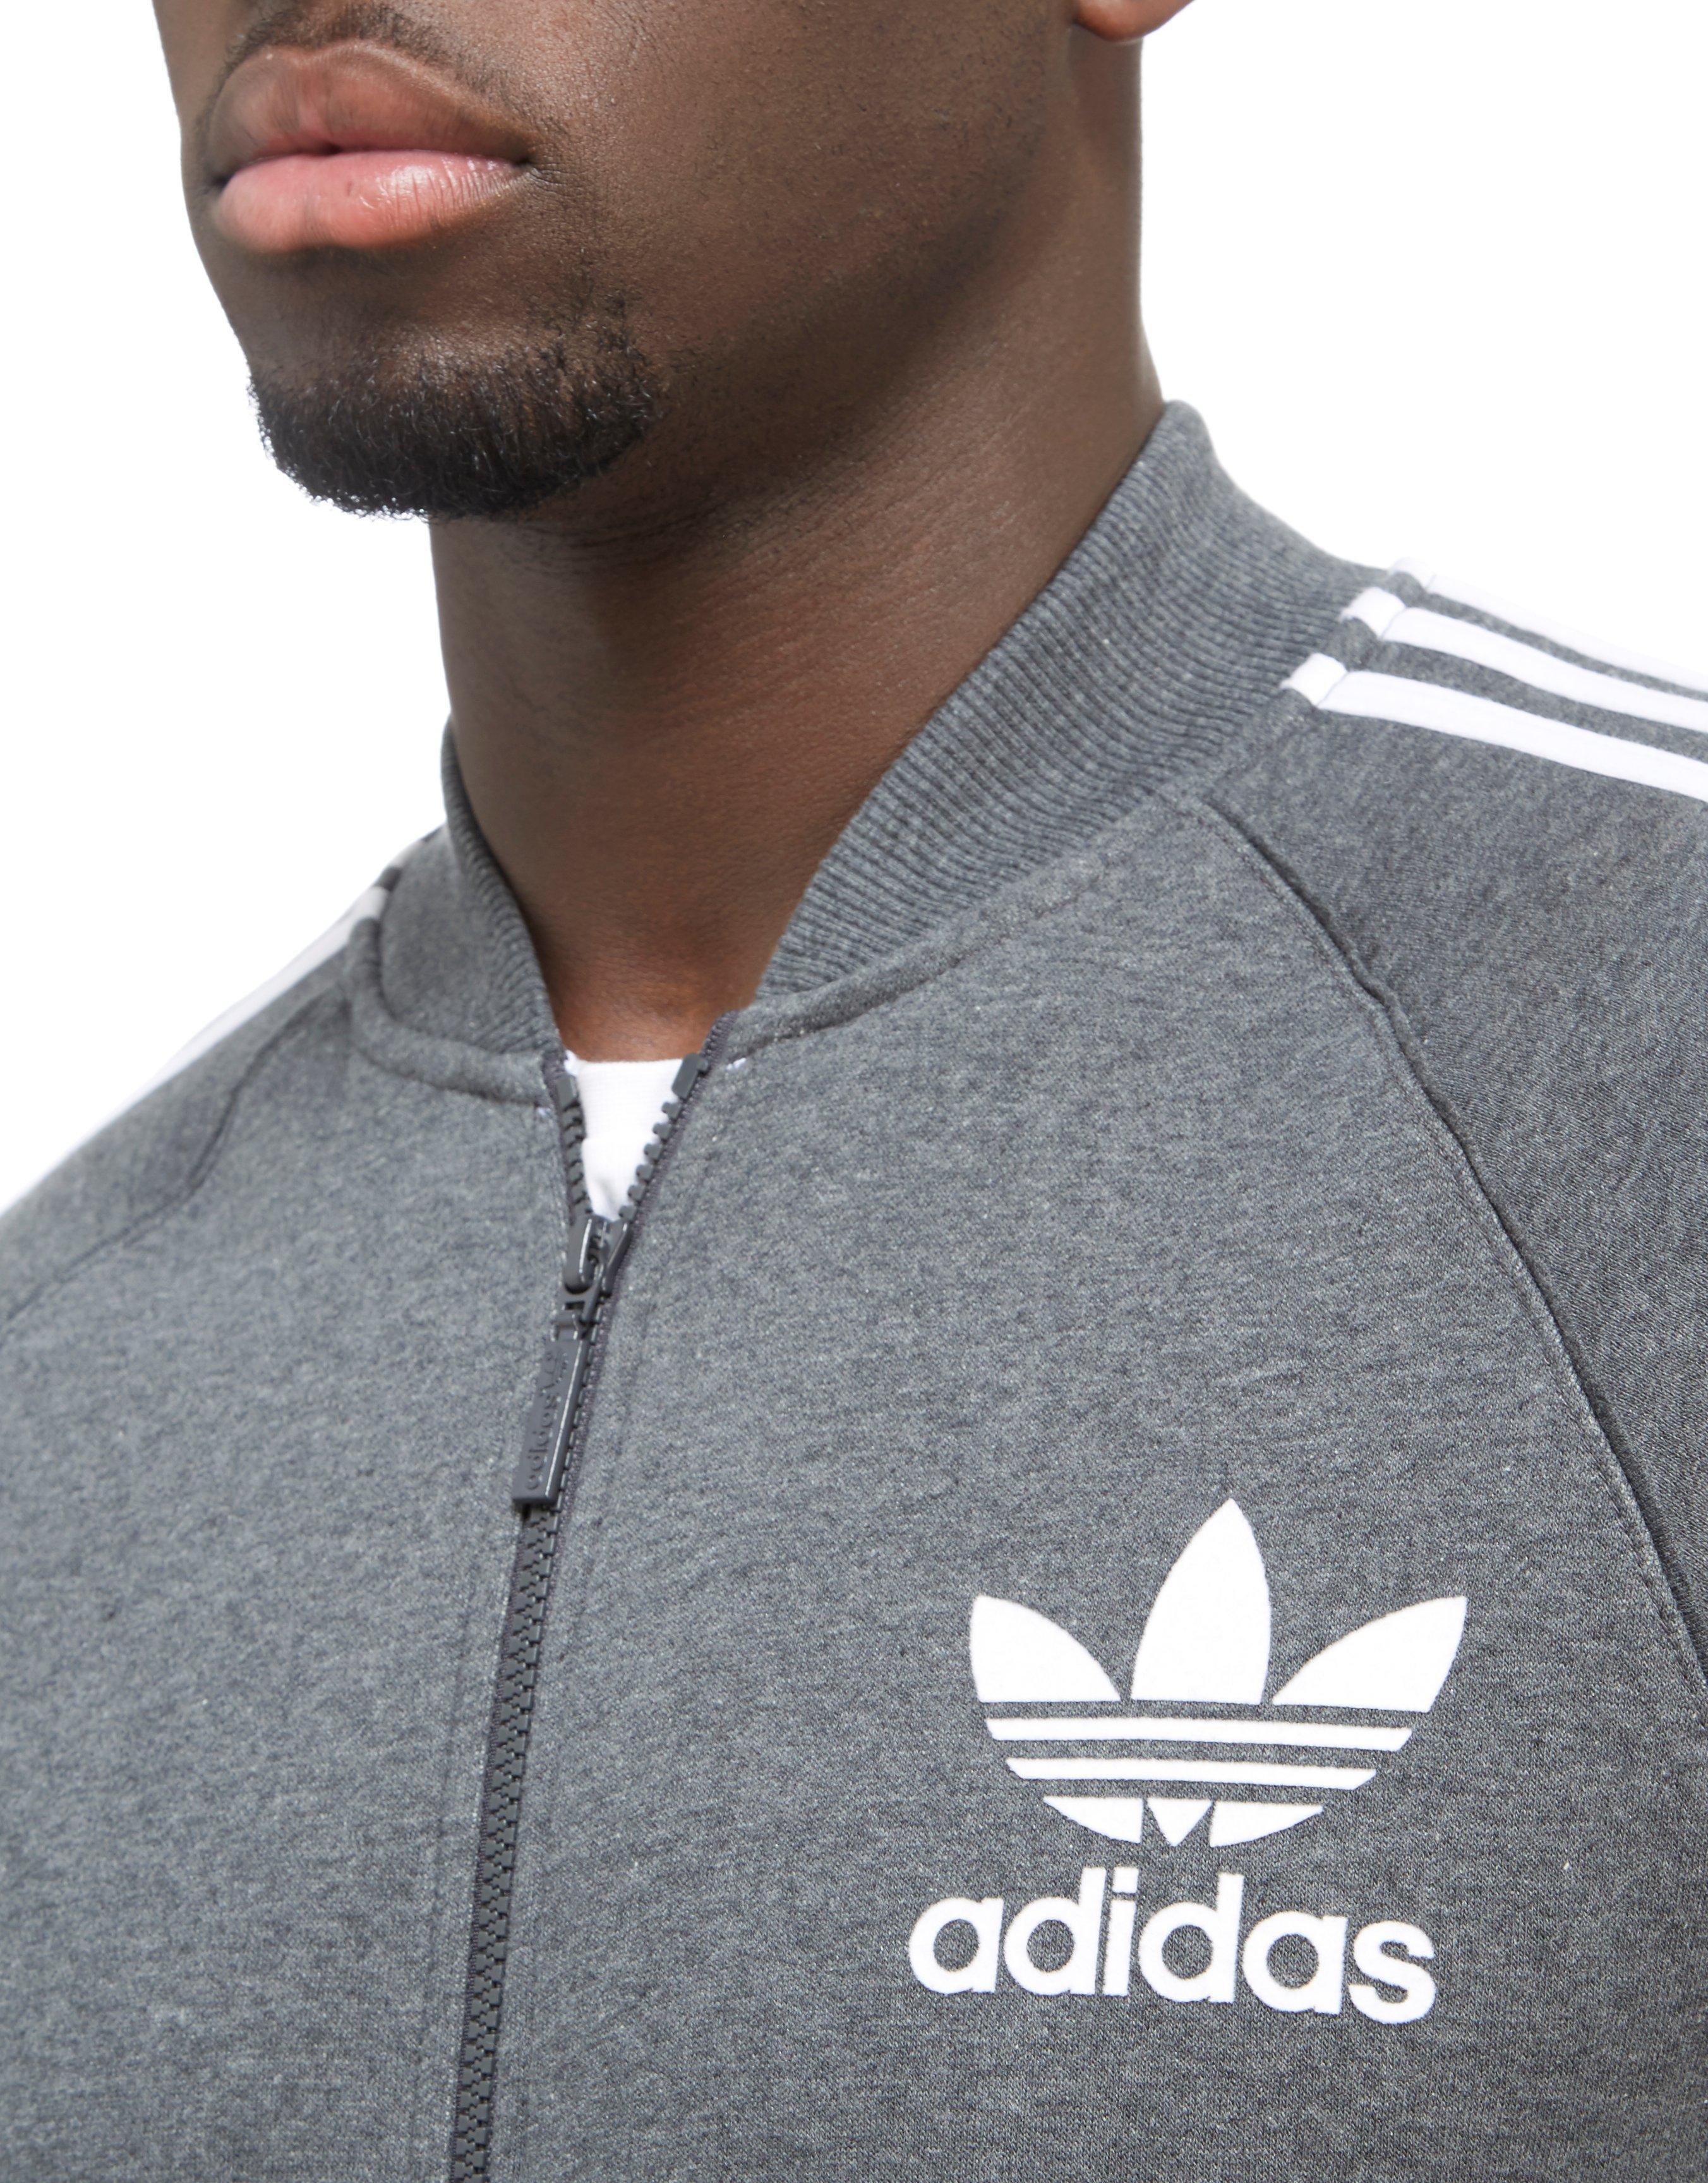 adidas Originals California Fleece Track Top in Dark Grey/White (Gray) for  Men - Lyst